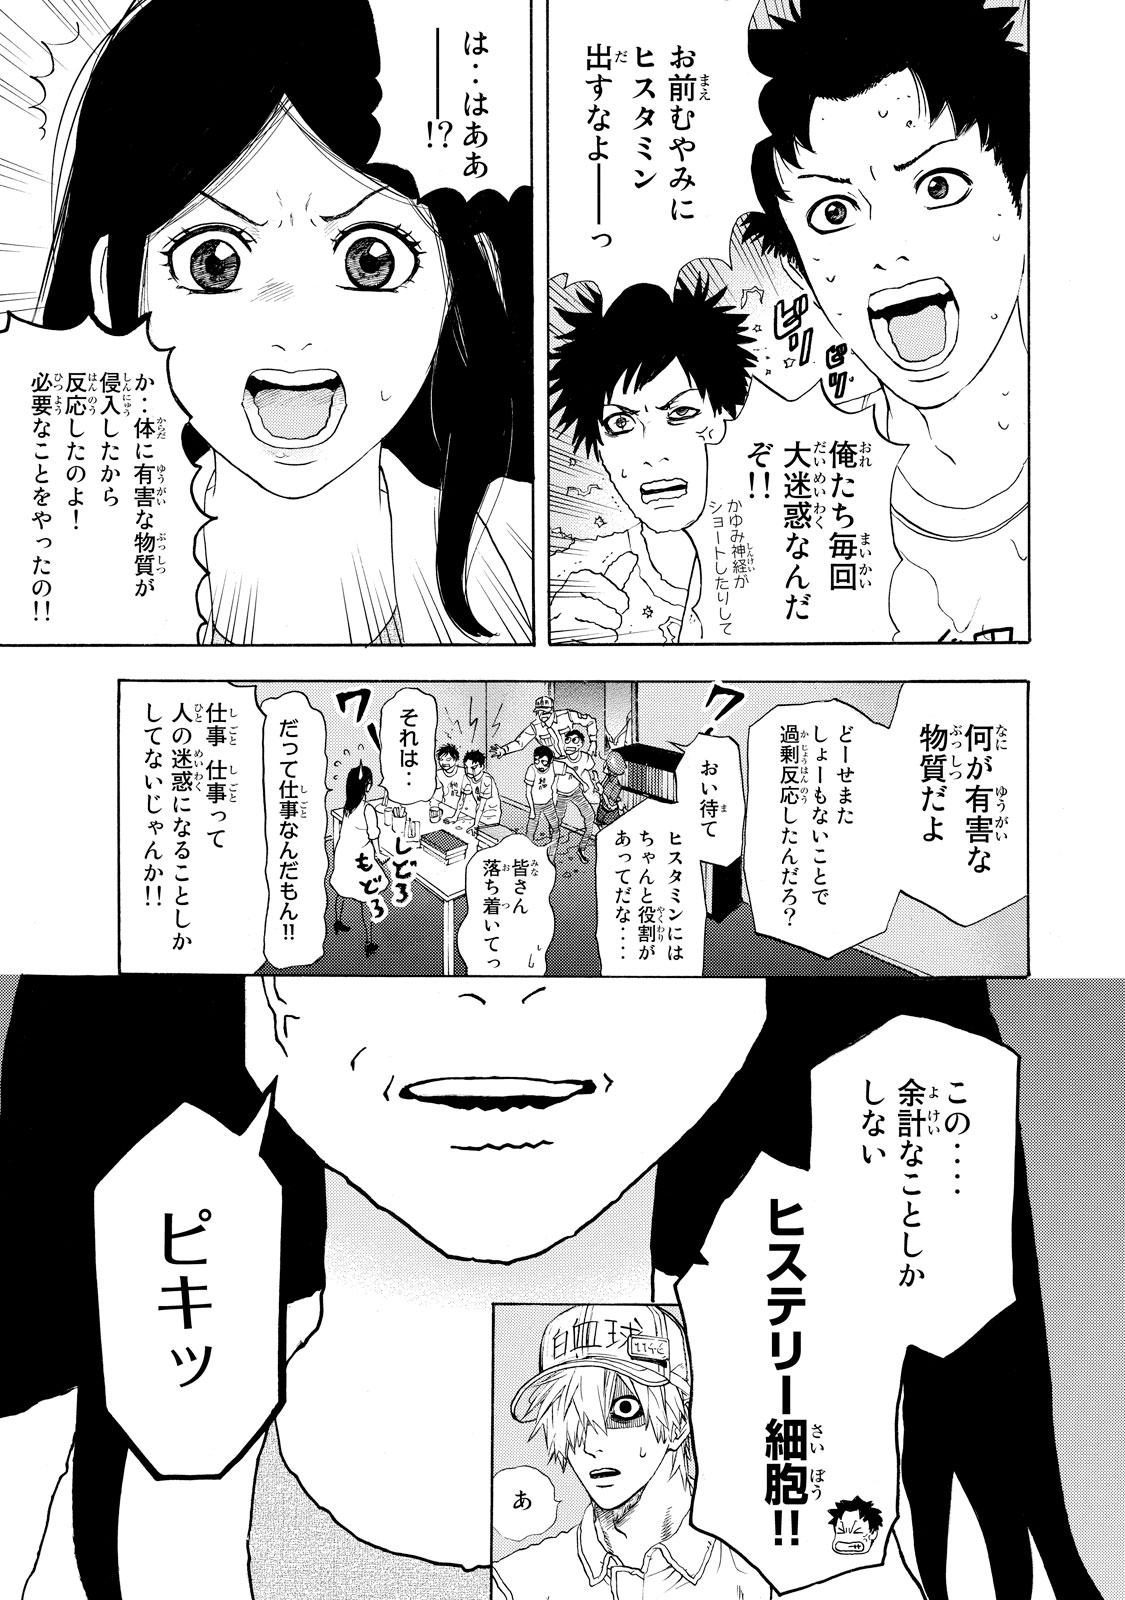 Hataraku Saibou - Chapter 16 - Page 5